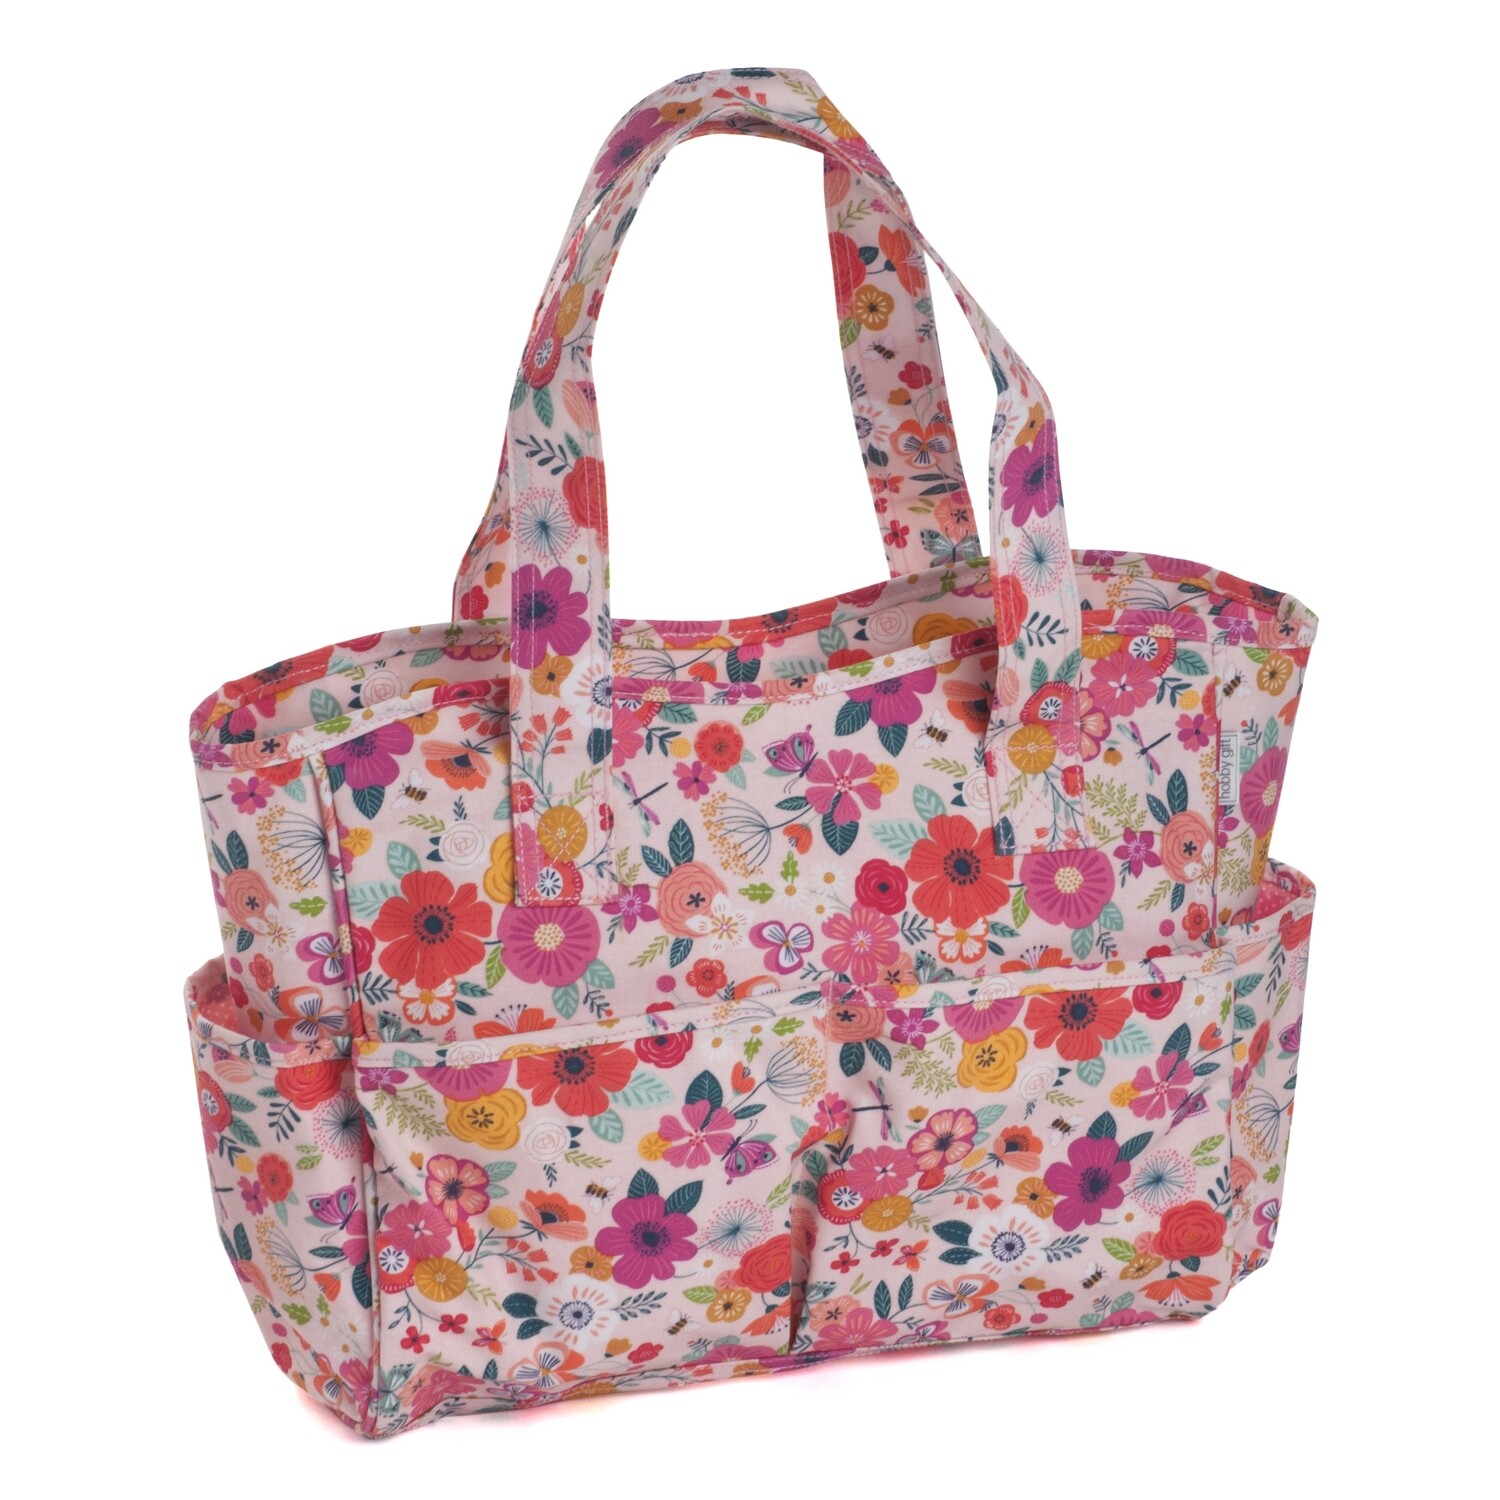 Craft Bag - Floral Garden Pink